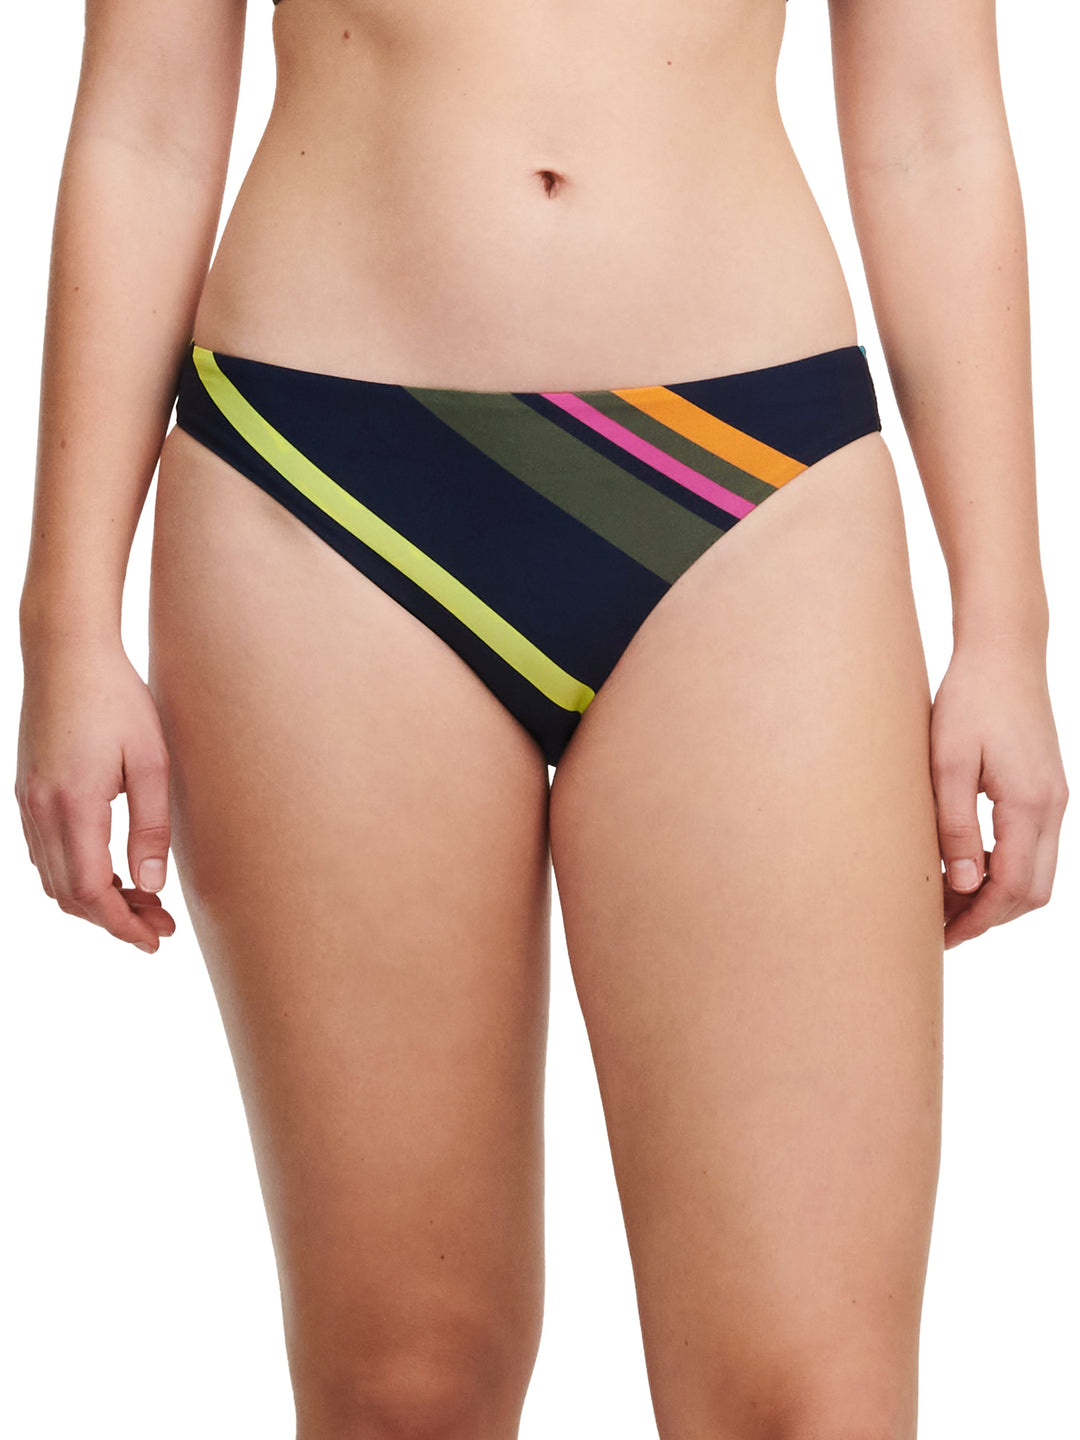 Chantelle Swimwear Identity Slip - Slip bikini a righe colorate Chantelle